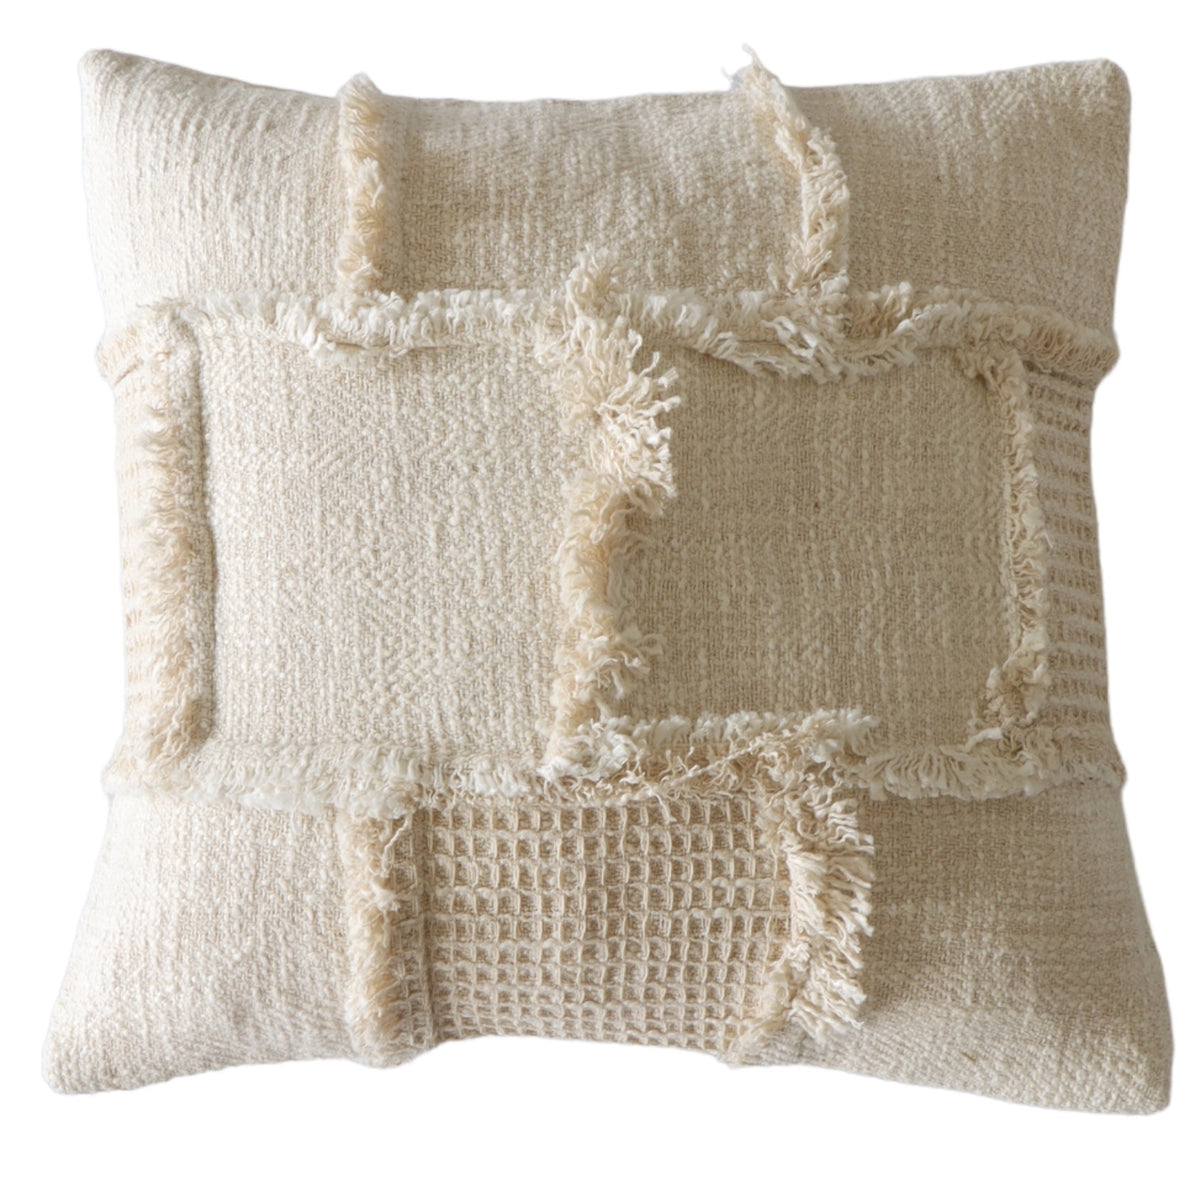 Rebellious Edge Woven Cotton Frayed Patchwork Pillow 18 Inch - Holistic Habitat 